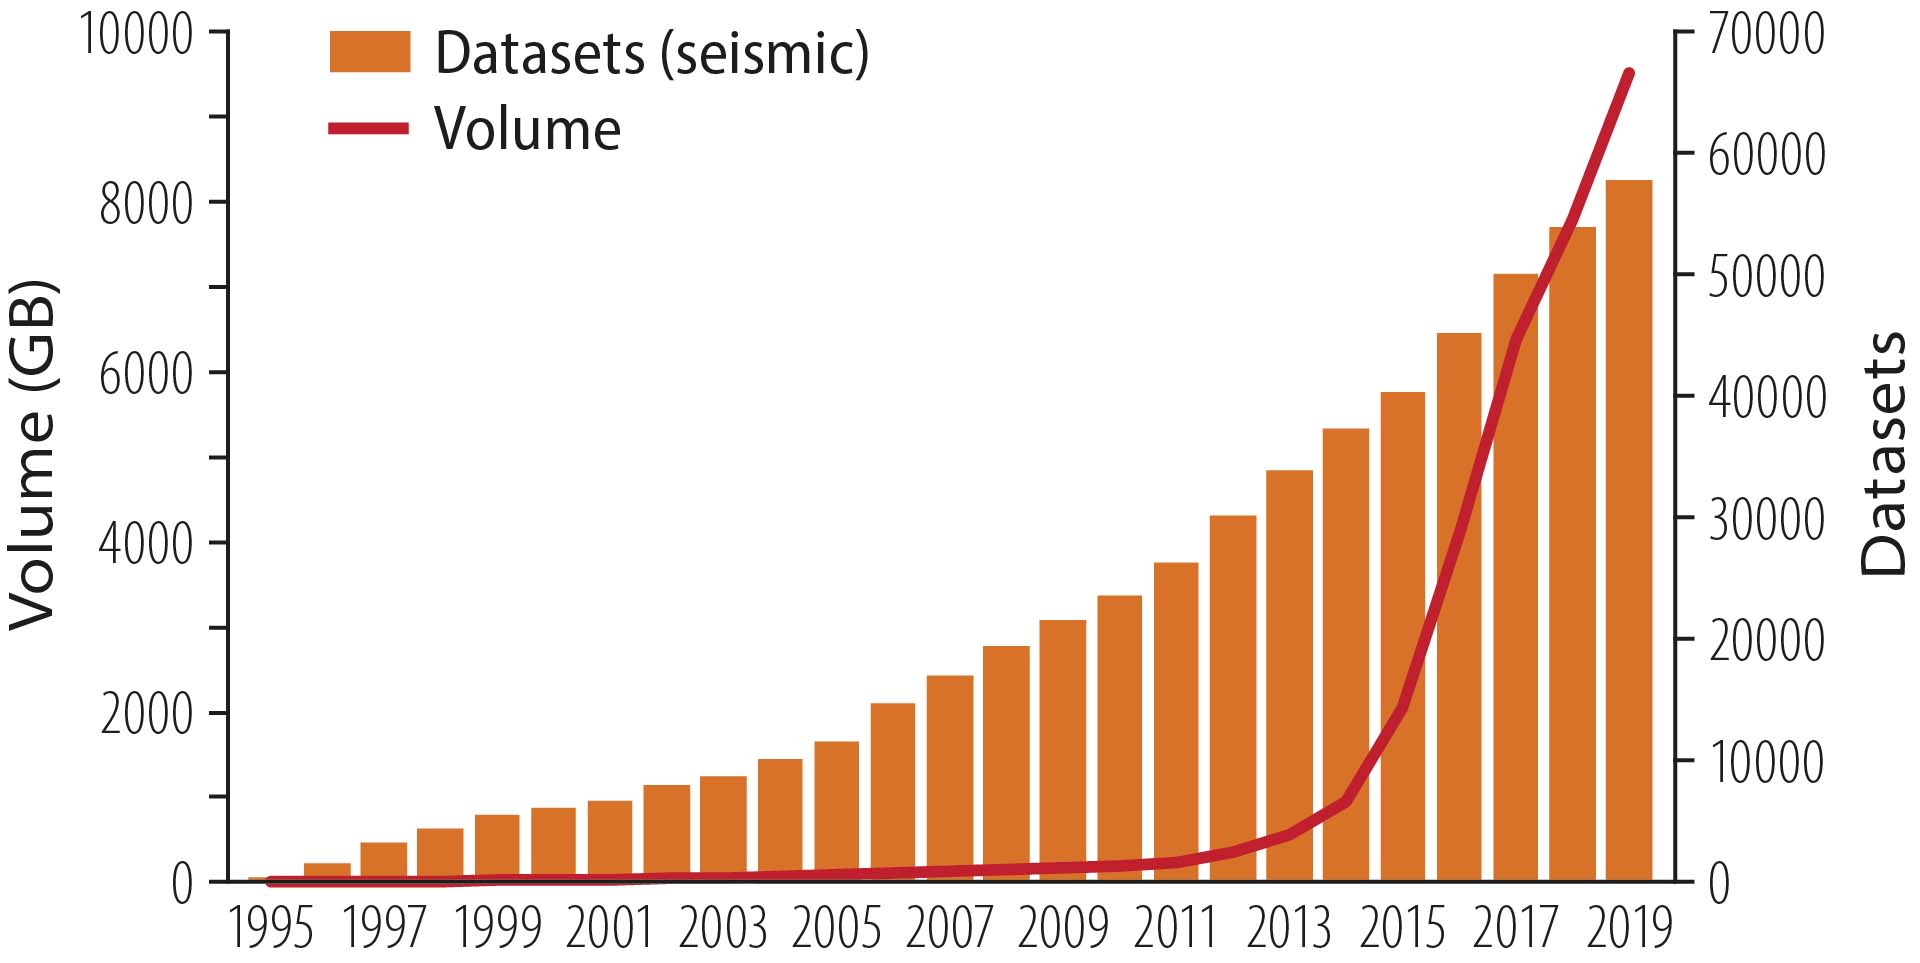 Figure 5.2 Development of seismic data volume in Diskos, 1994-2019